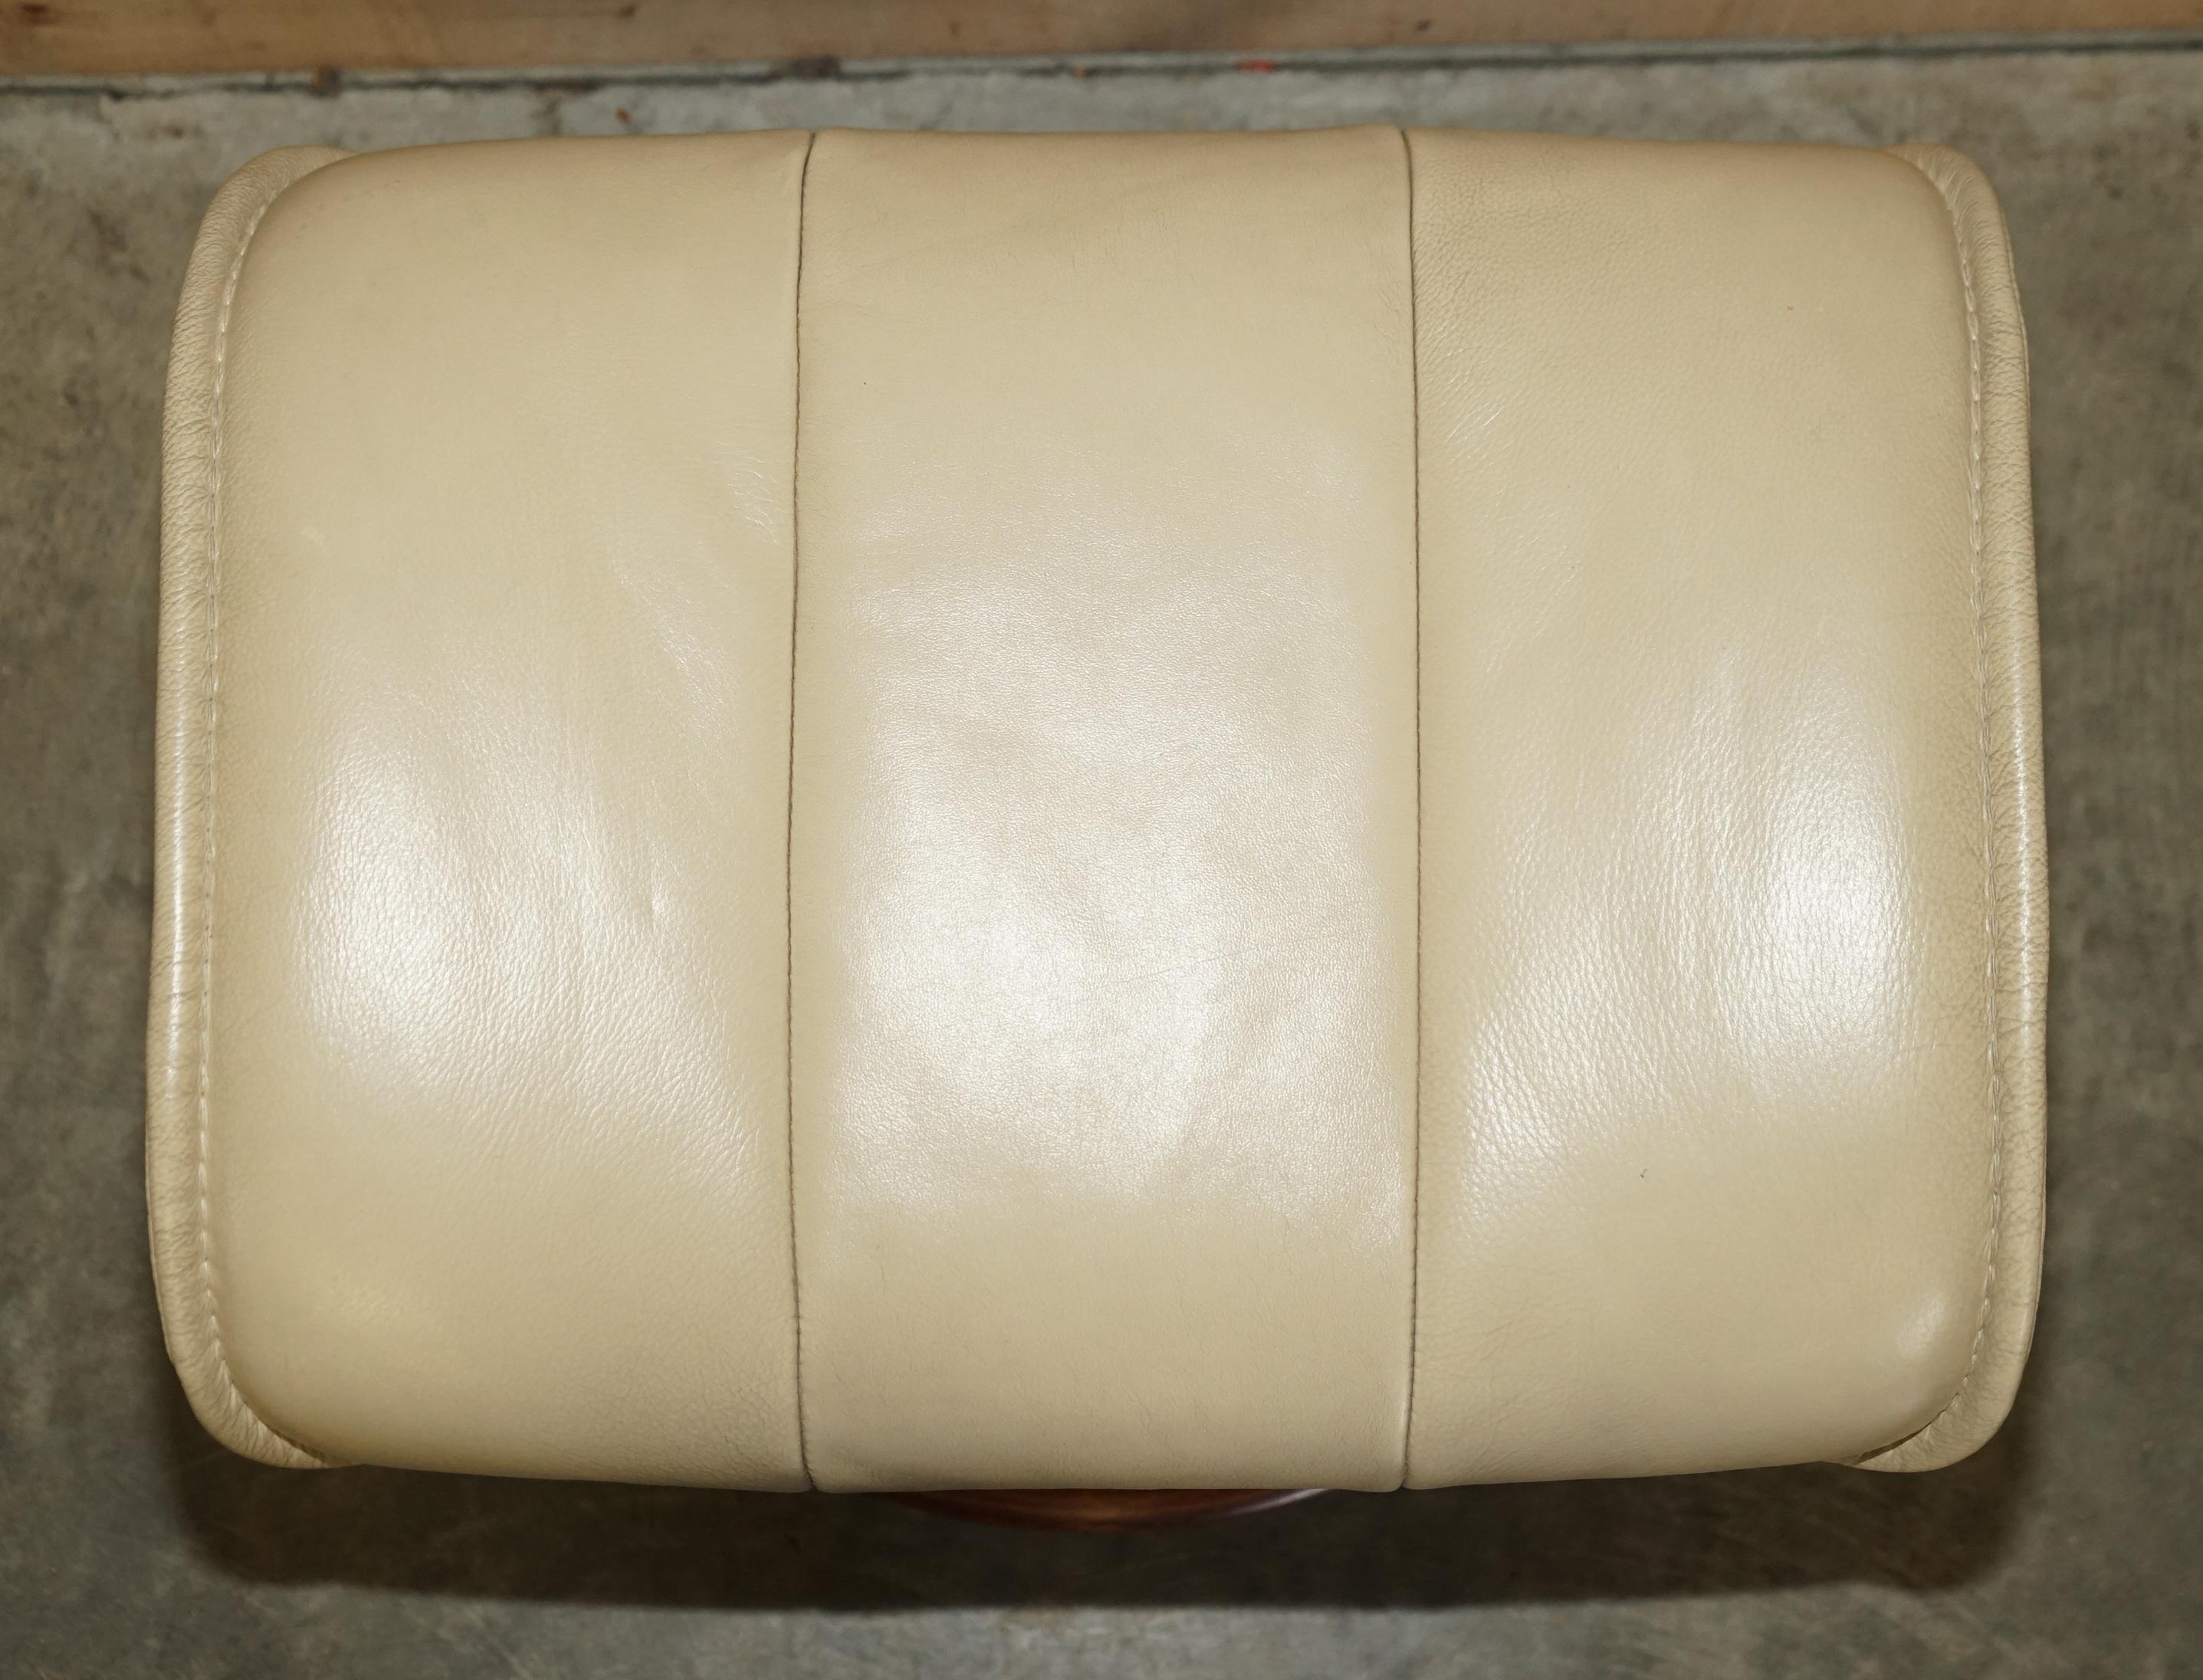 European Ekornes Stressless Recliner Leather Swivel Footstool Ottoman Cream Leather